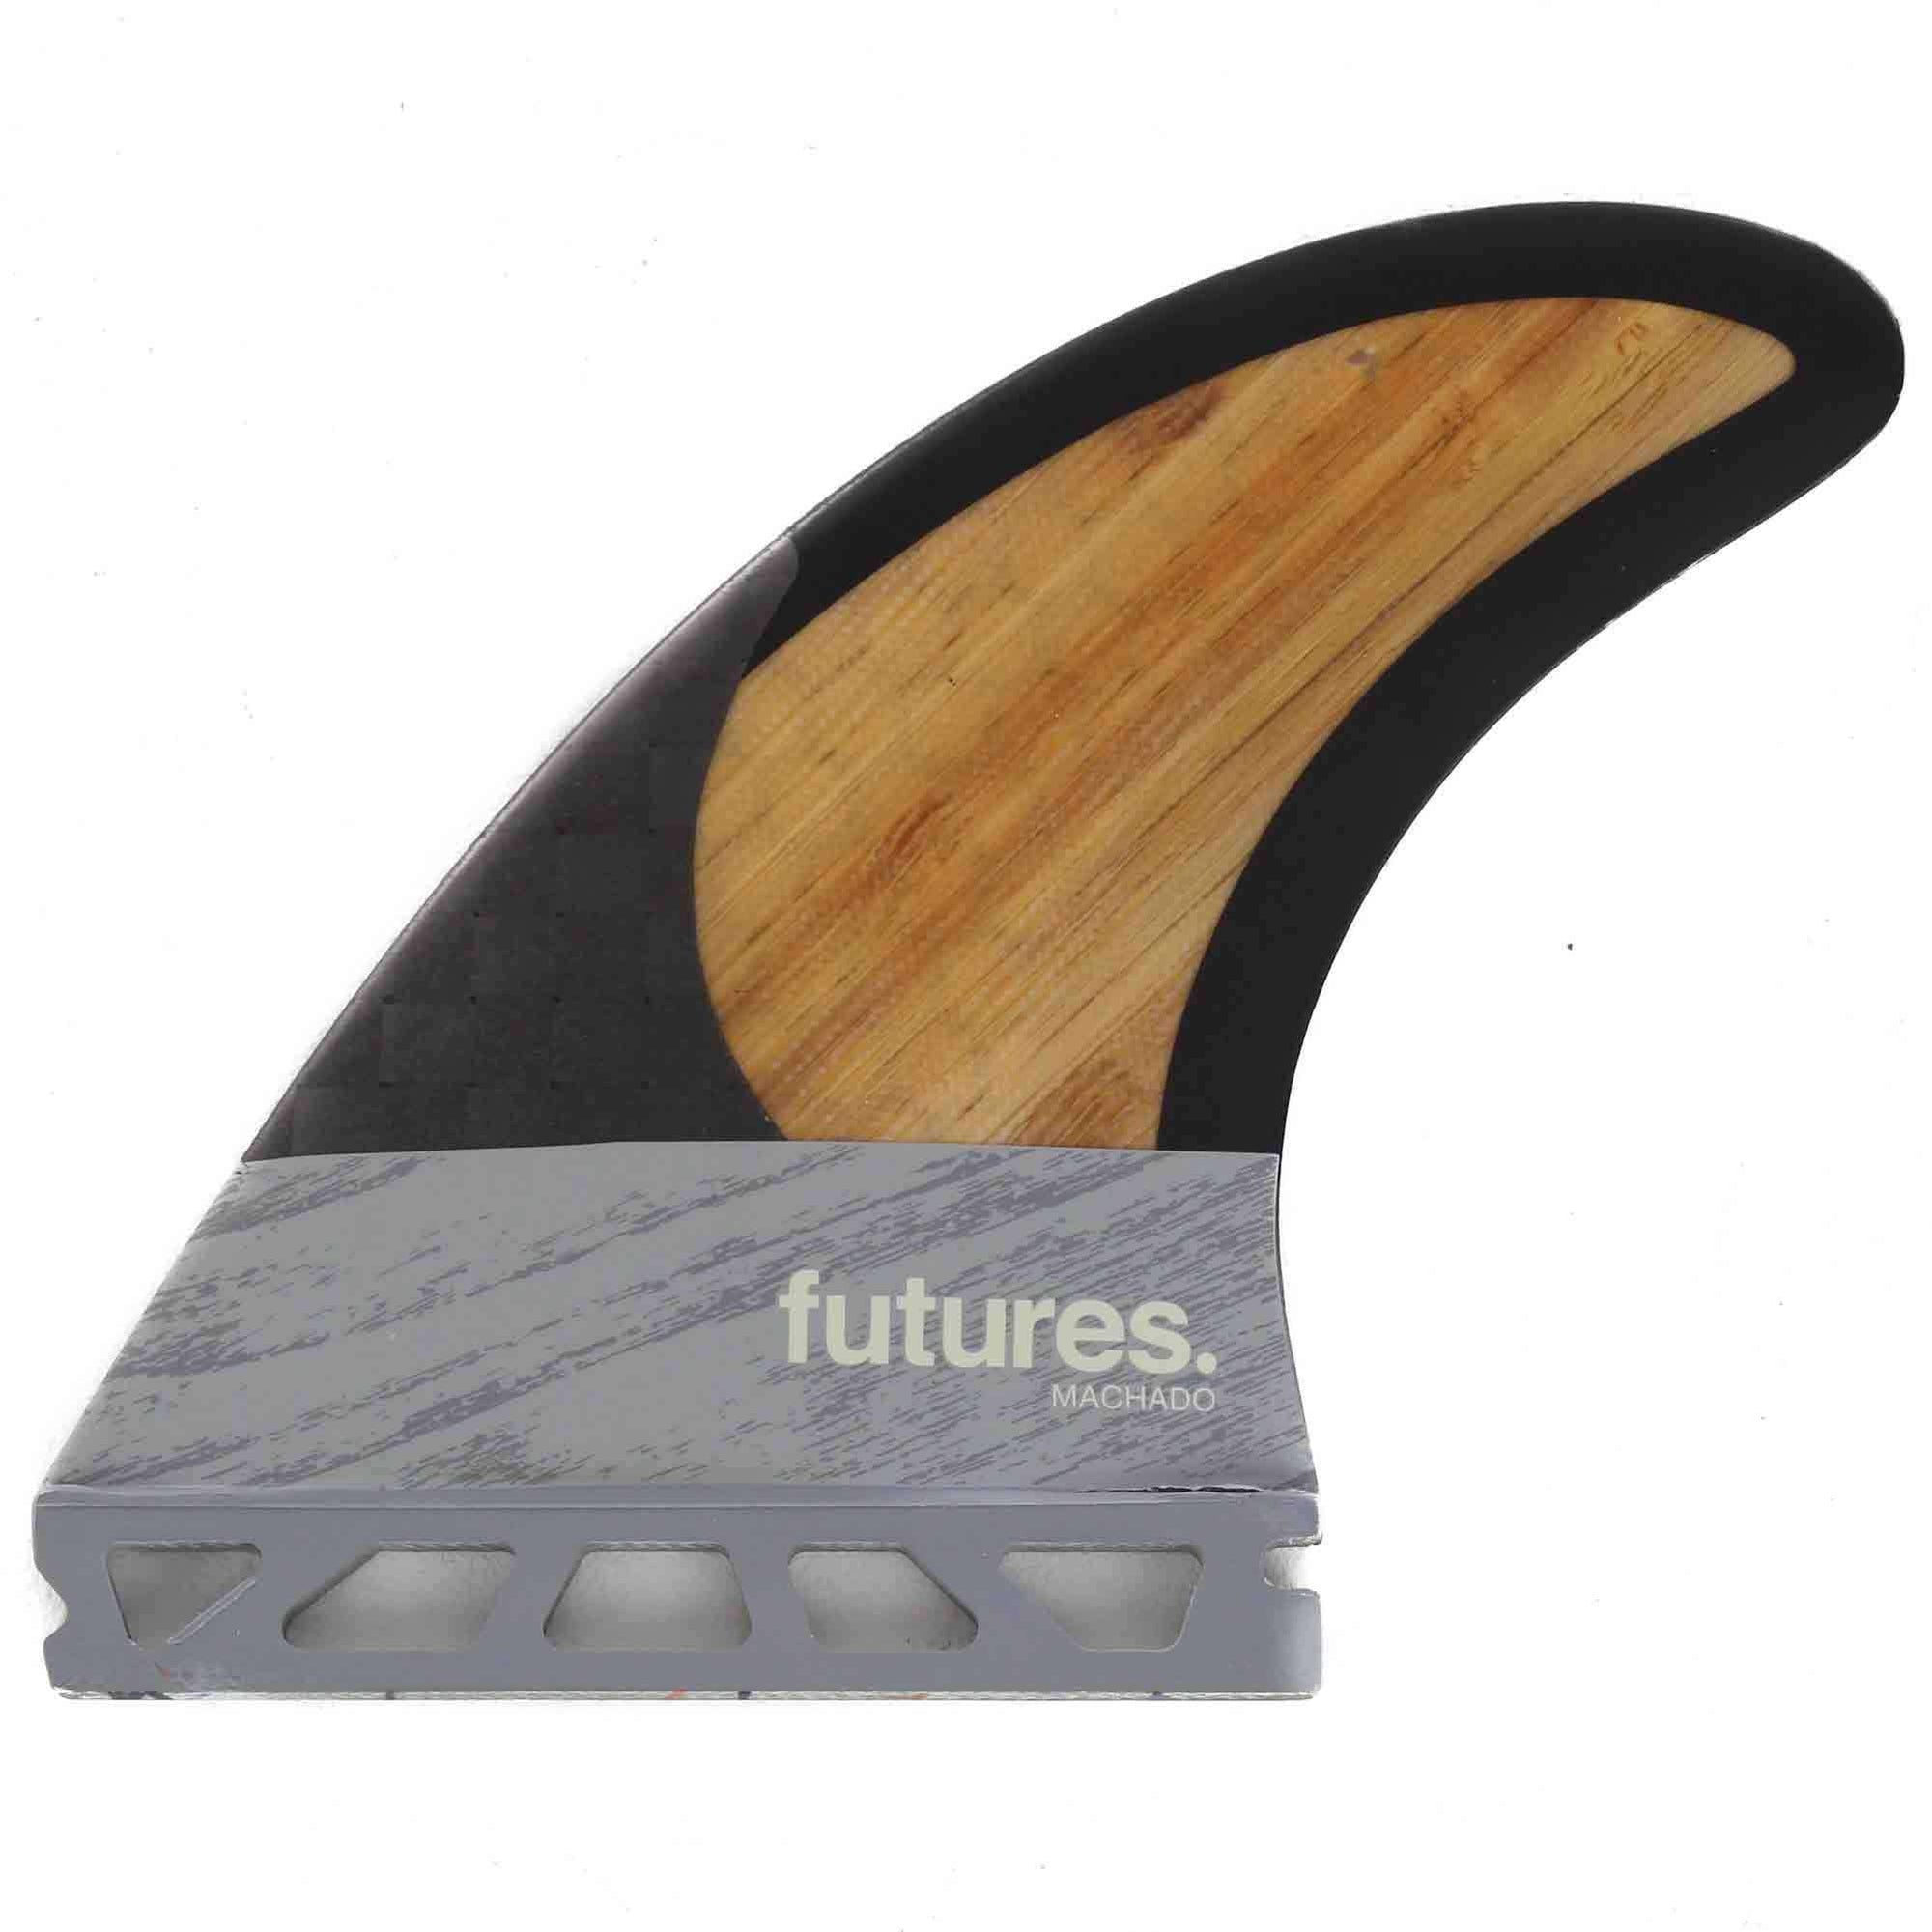 Futures Machado V2 Blackstix 3.0 Thruster Surfboard Fins - Bamboo Grey Futures Single Tab Fins by Futures Medium Fins